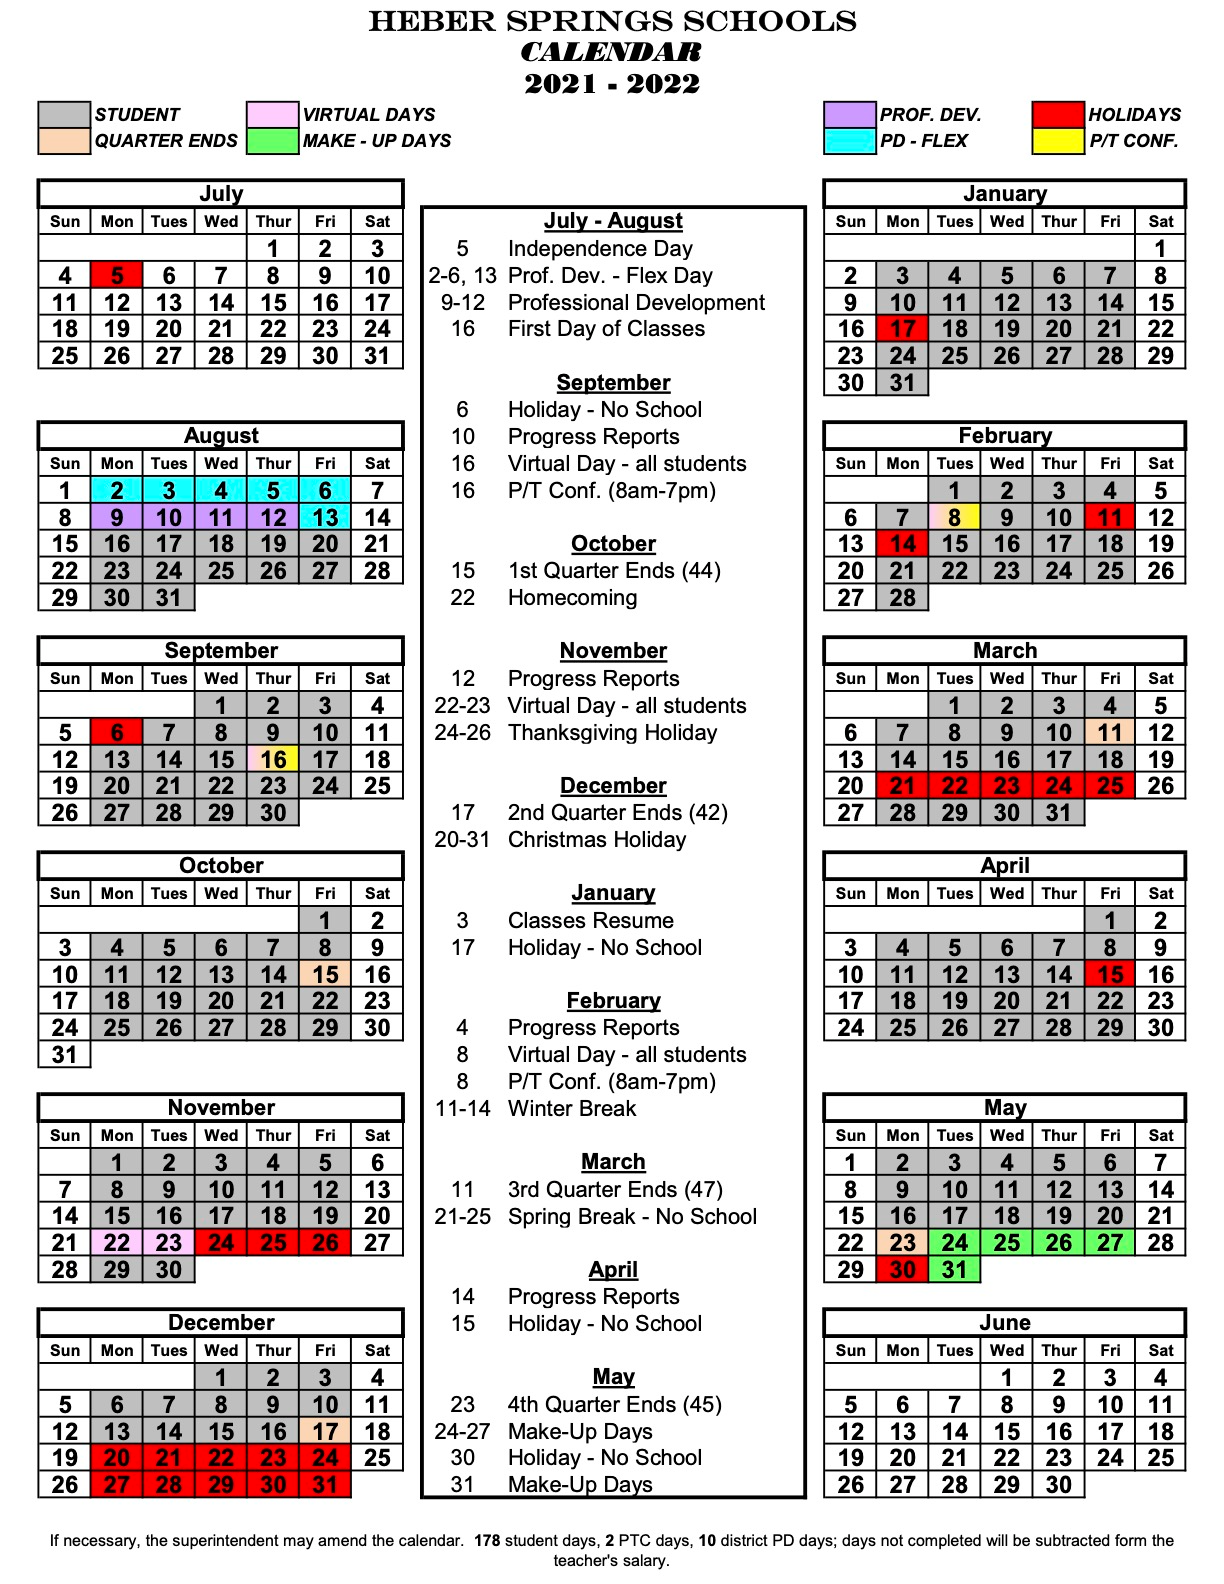 school-calendar-heber-springs-schools